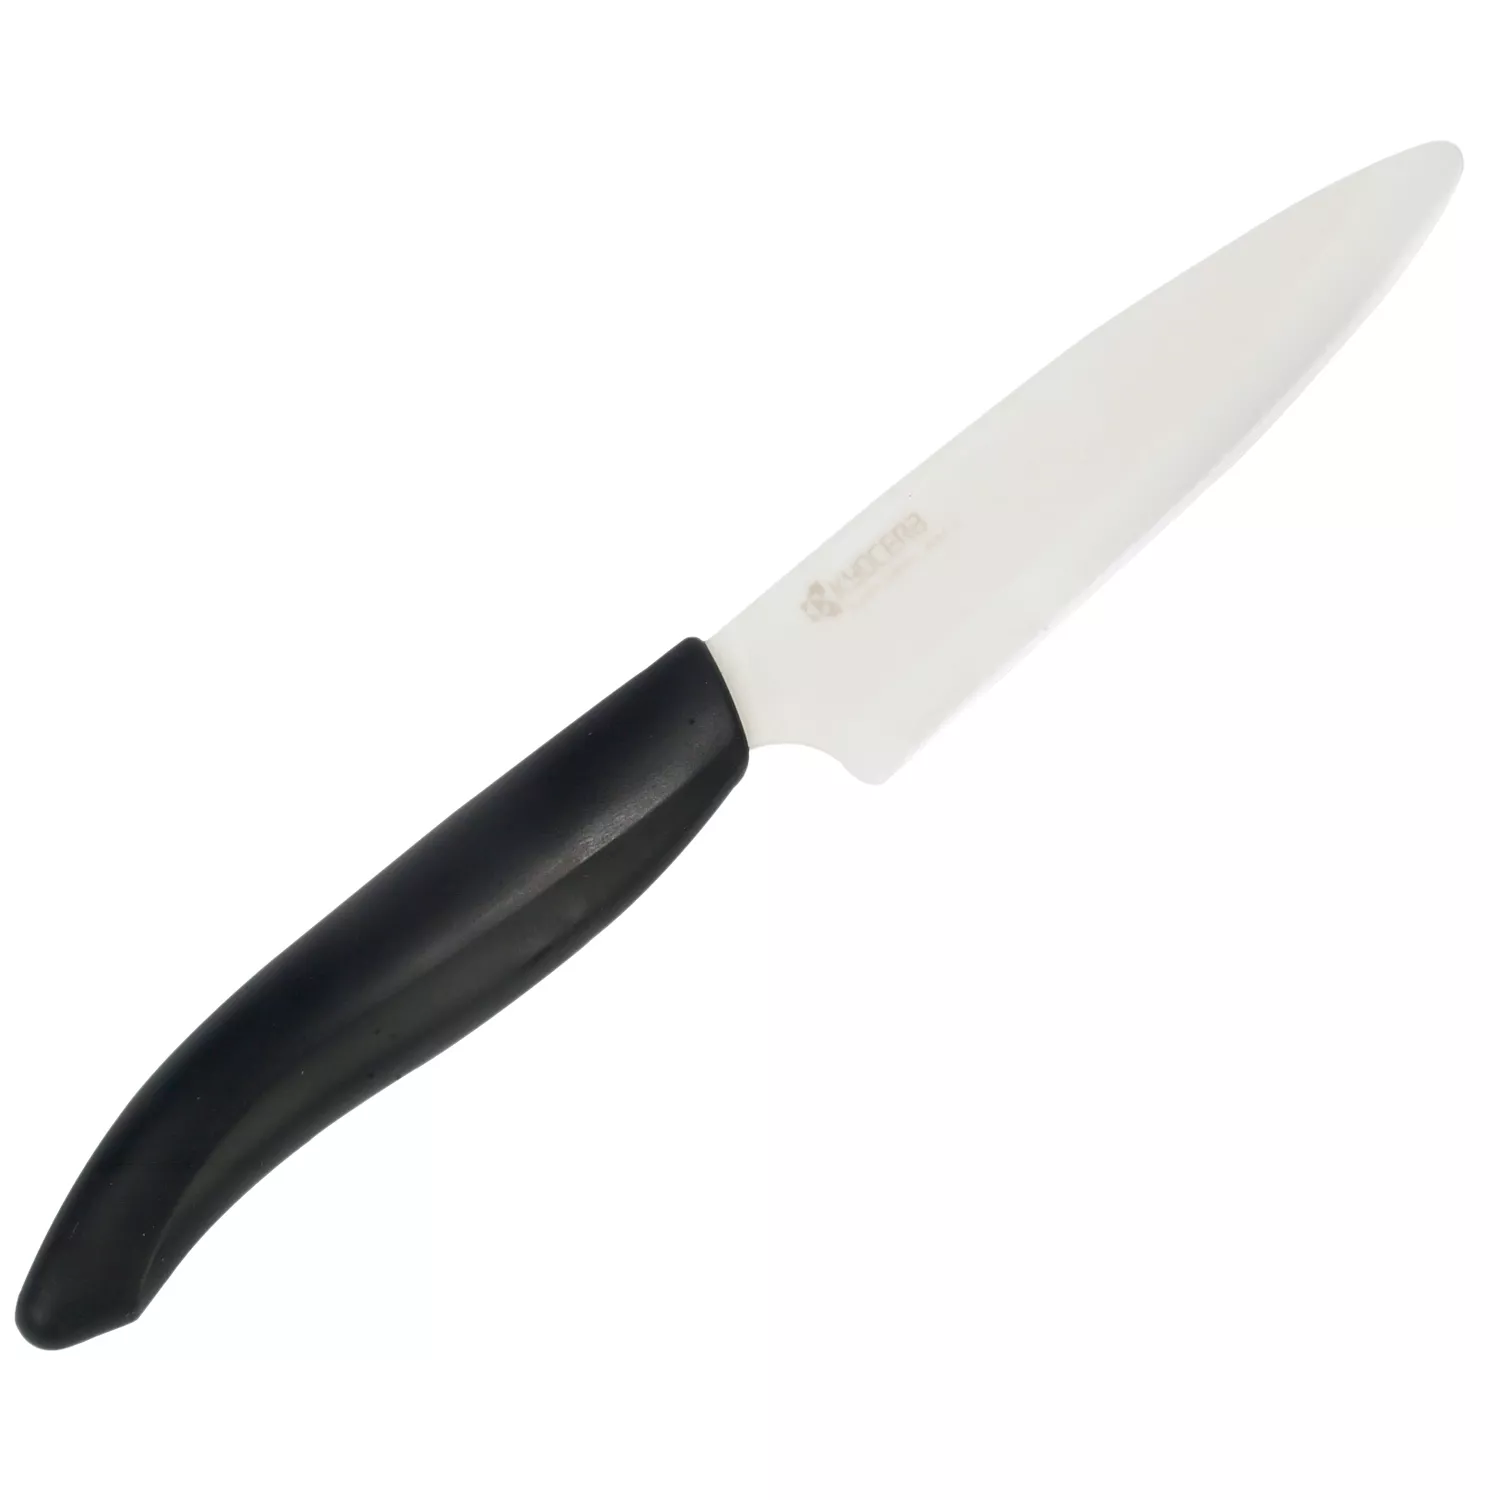 KYOCERA > The ultra-sharp lightweight ceramic utility knife makes